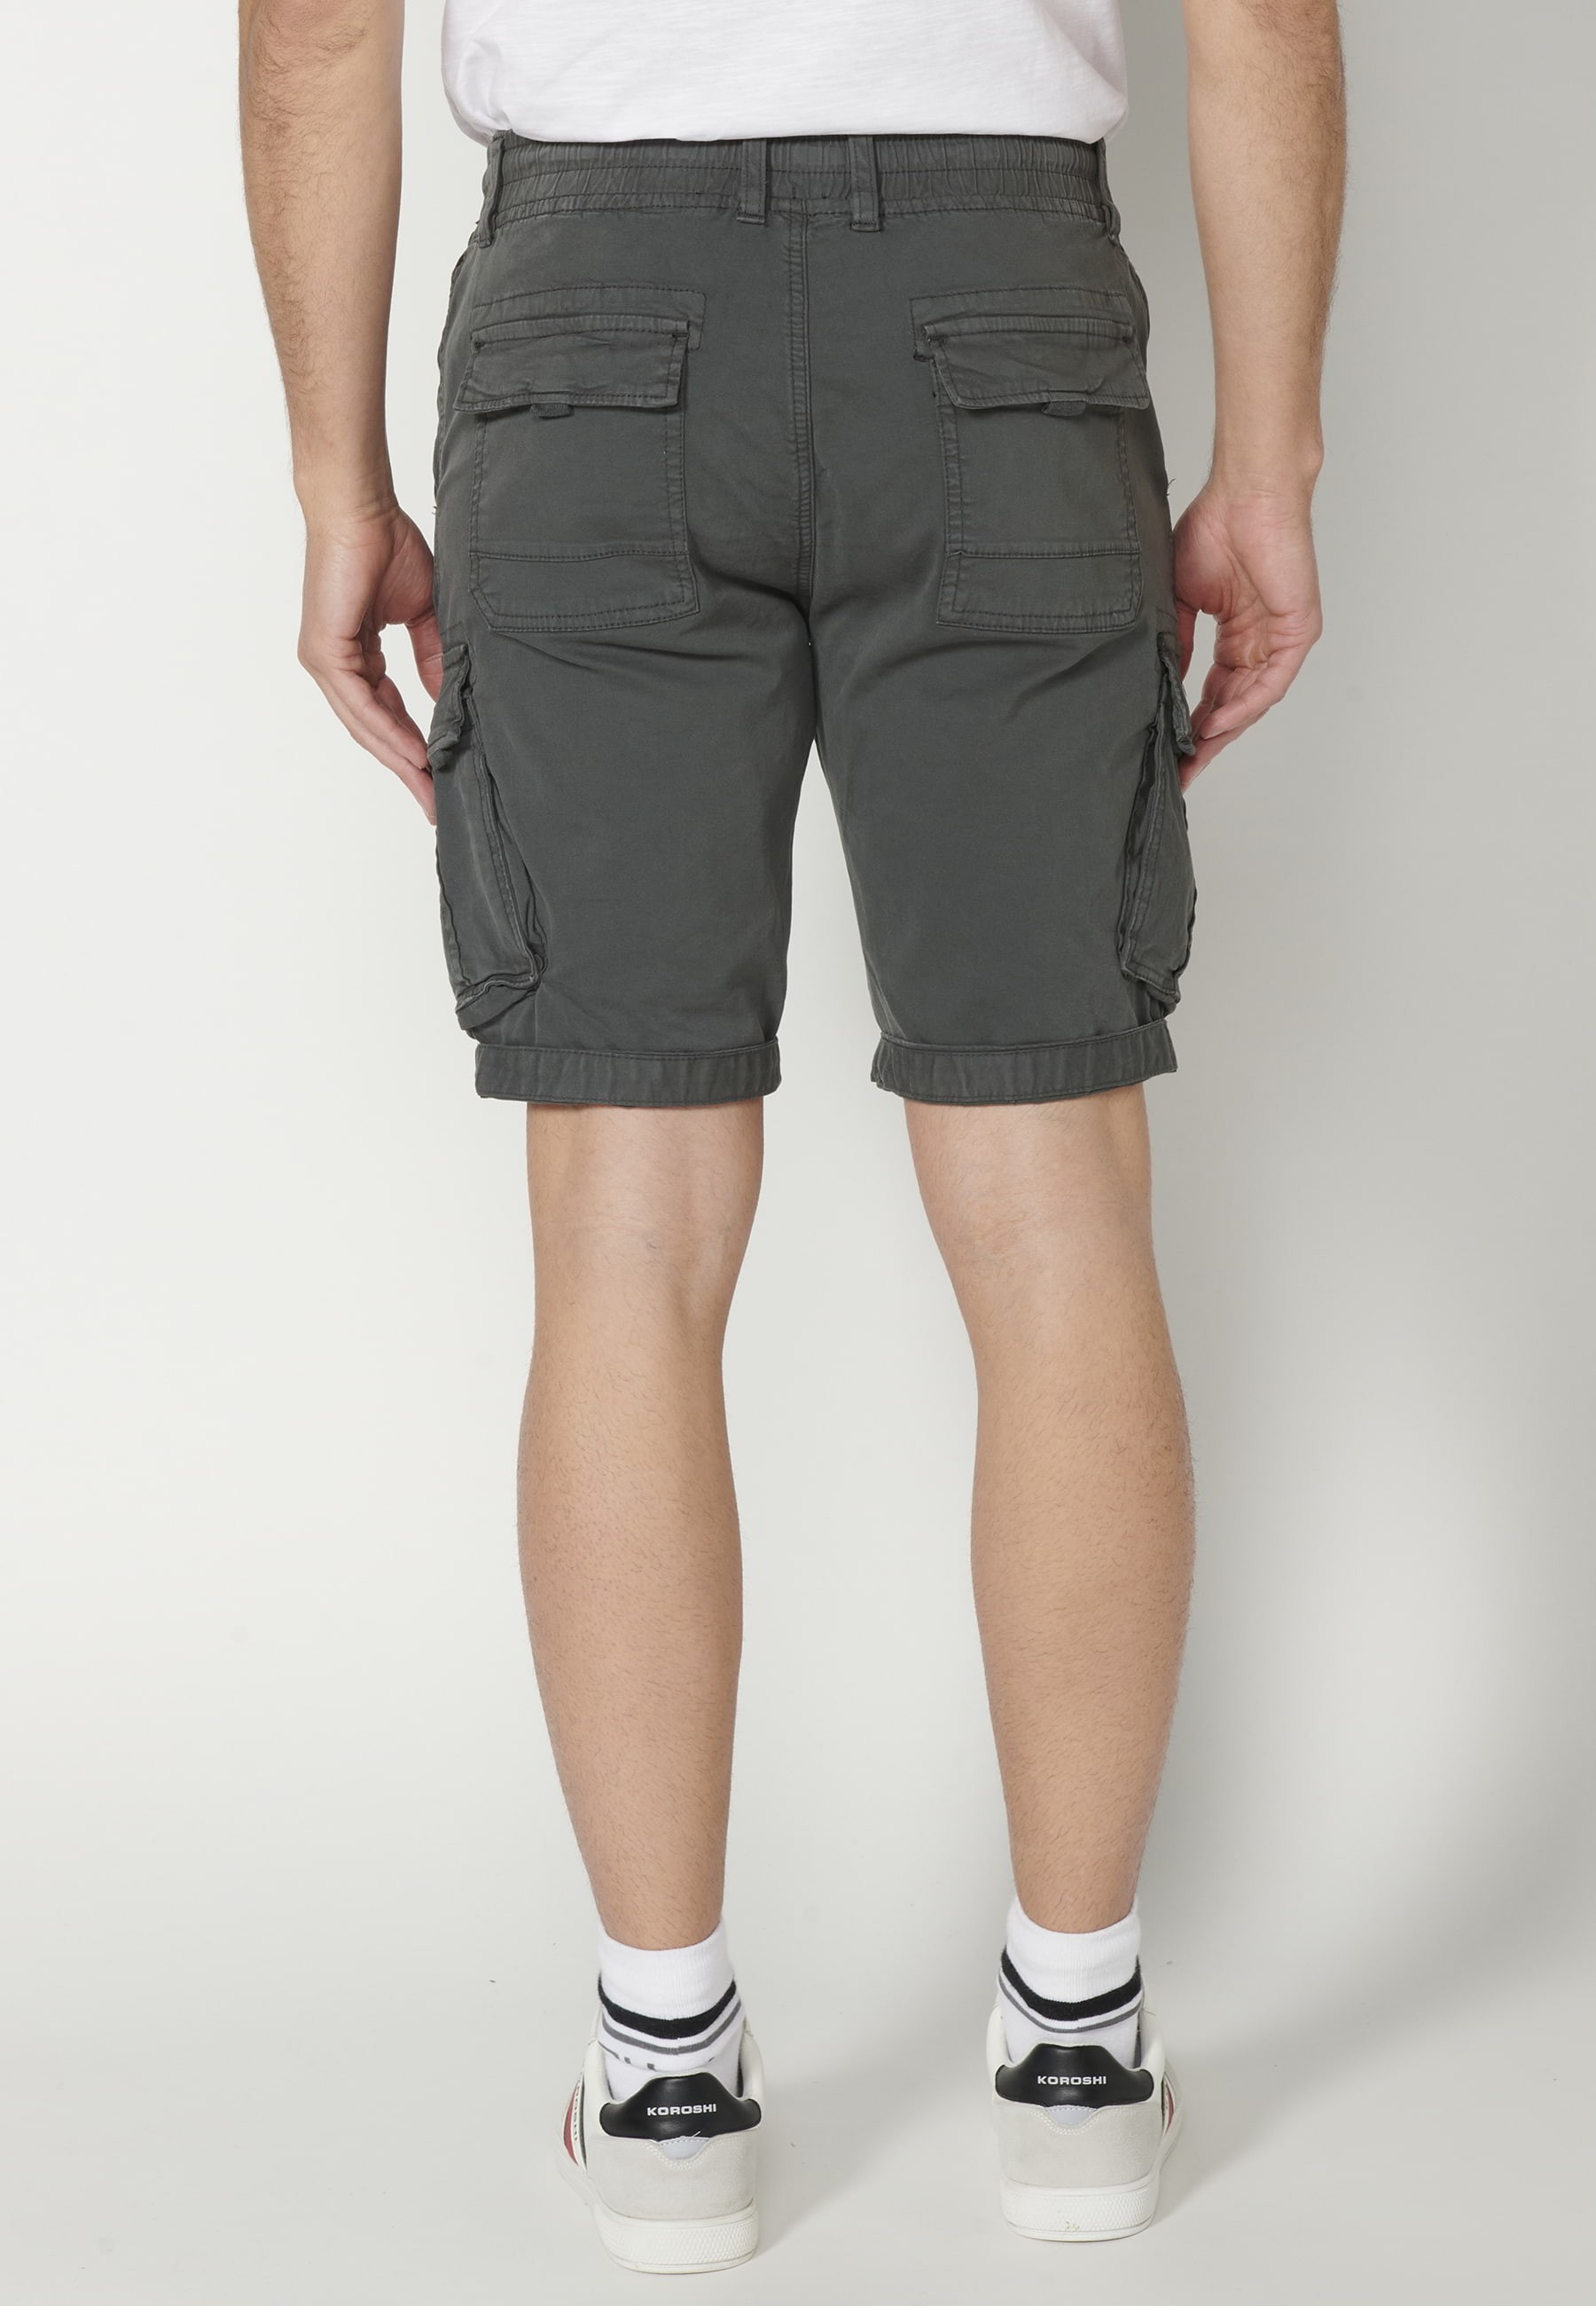 Bermuda cargo style shorts in Gray color for Men